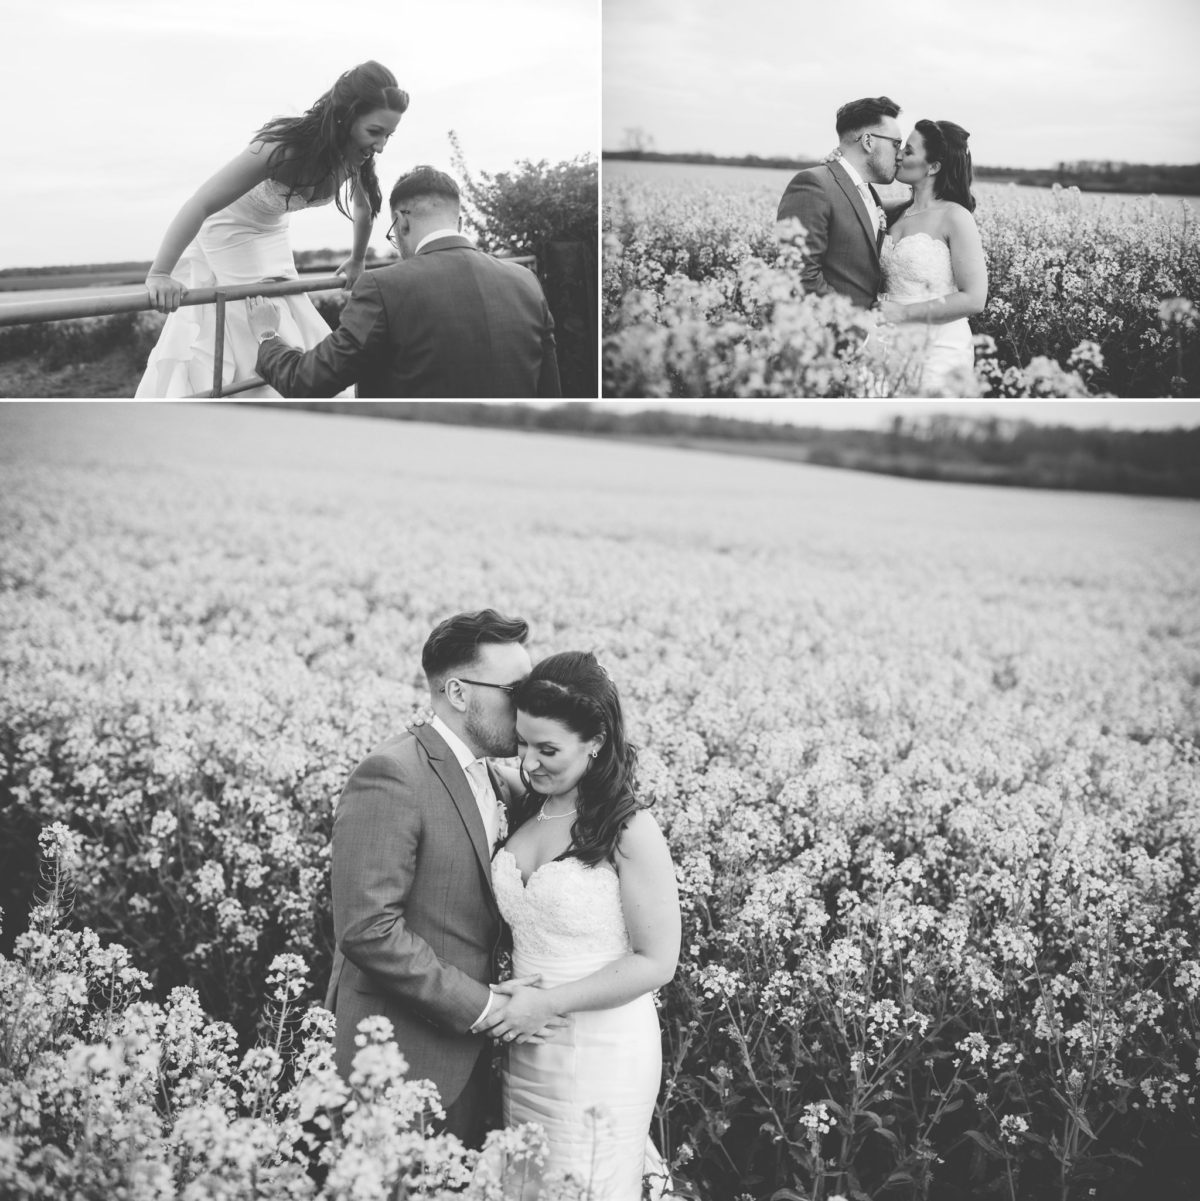 cripps_barn_gloucesterhsire_welsh_wedding_photographer_rachel_lambert_photography_jordan_amy_ 124